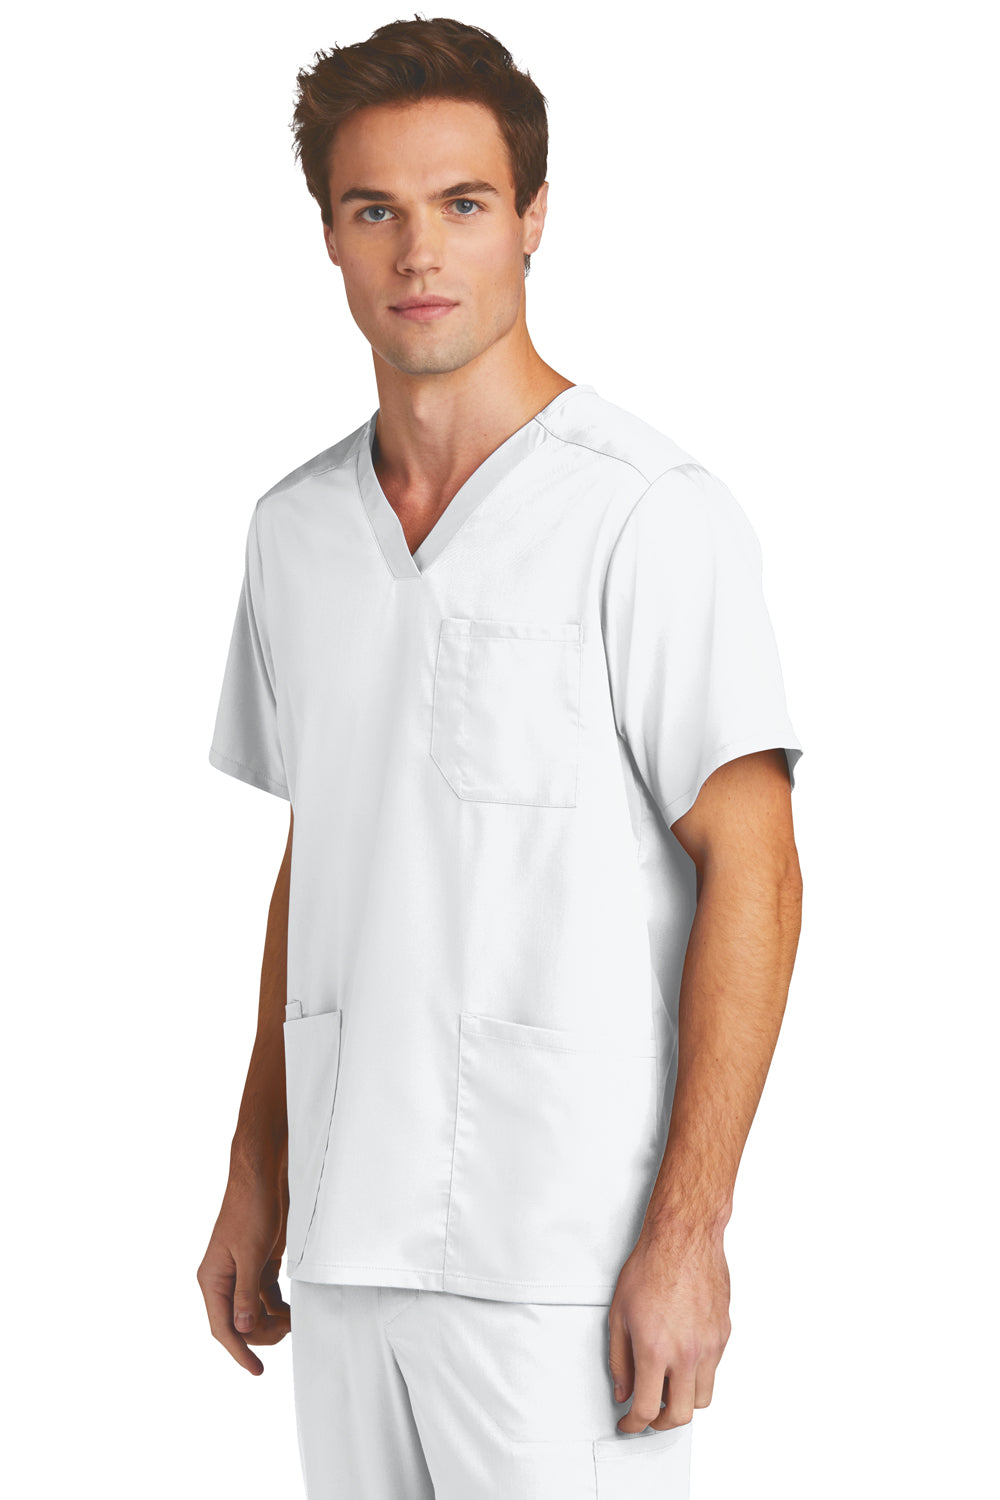 Wonderwink WW5068 Premiere Flex Short Sleeve V-Neck Shirt White 3Q